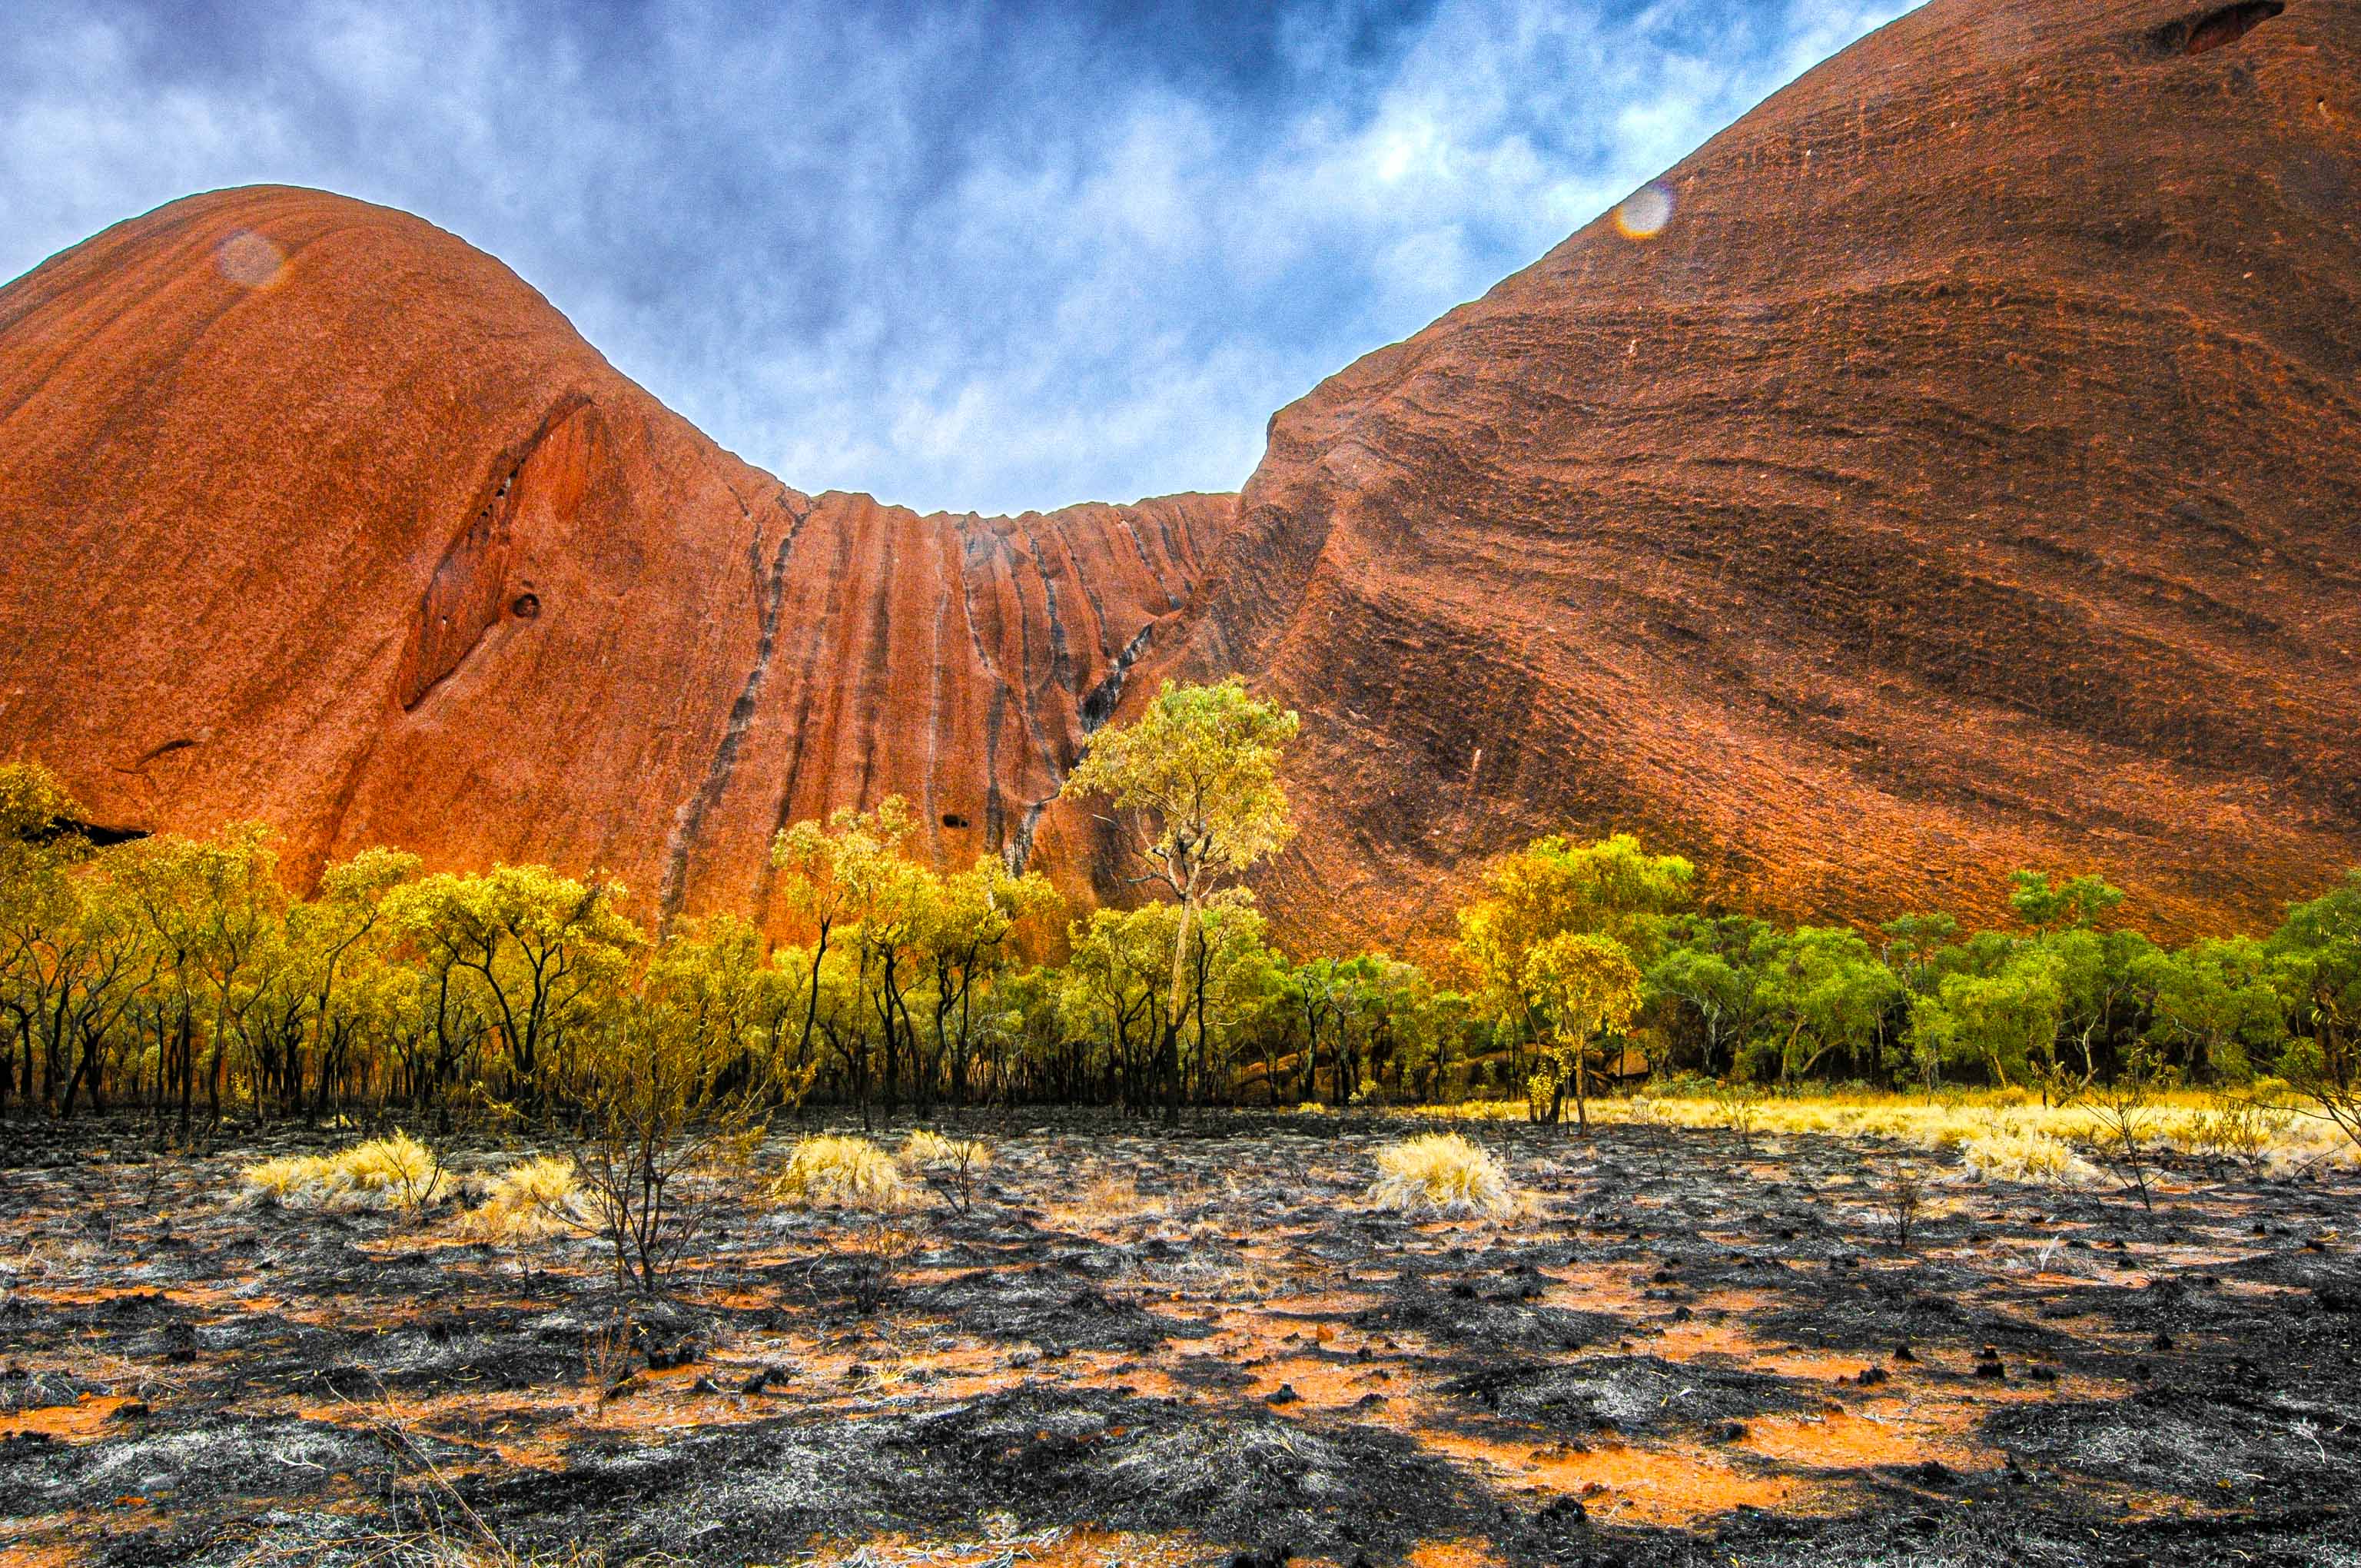 After the woodfire, Uluru, Australia